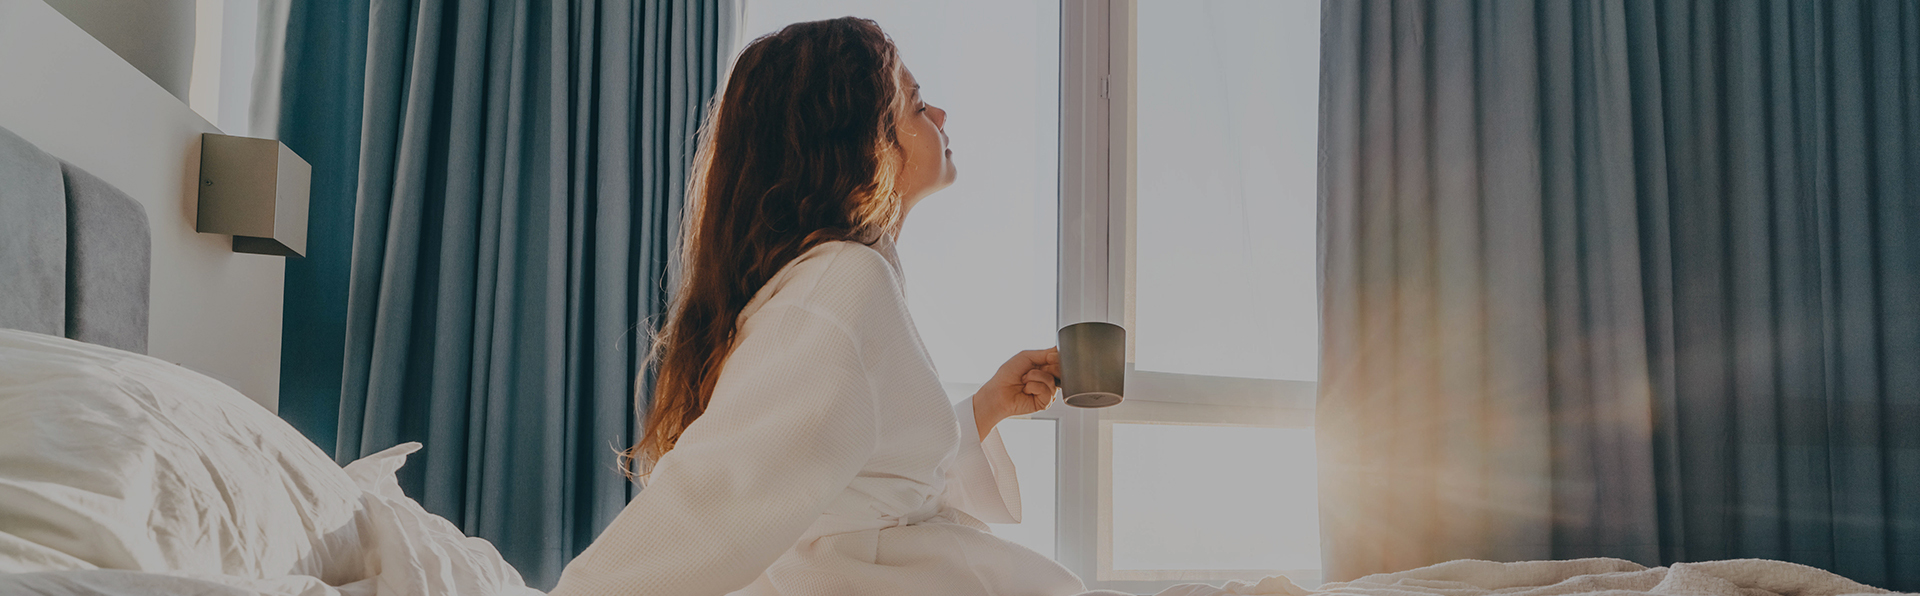 woman enjoying a cup of coffee with a bathrobe 